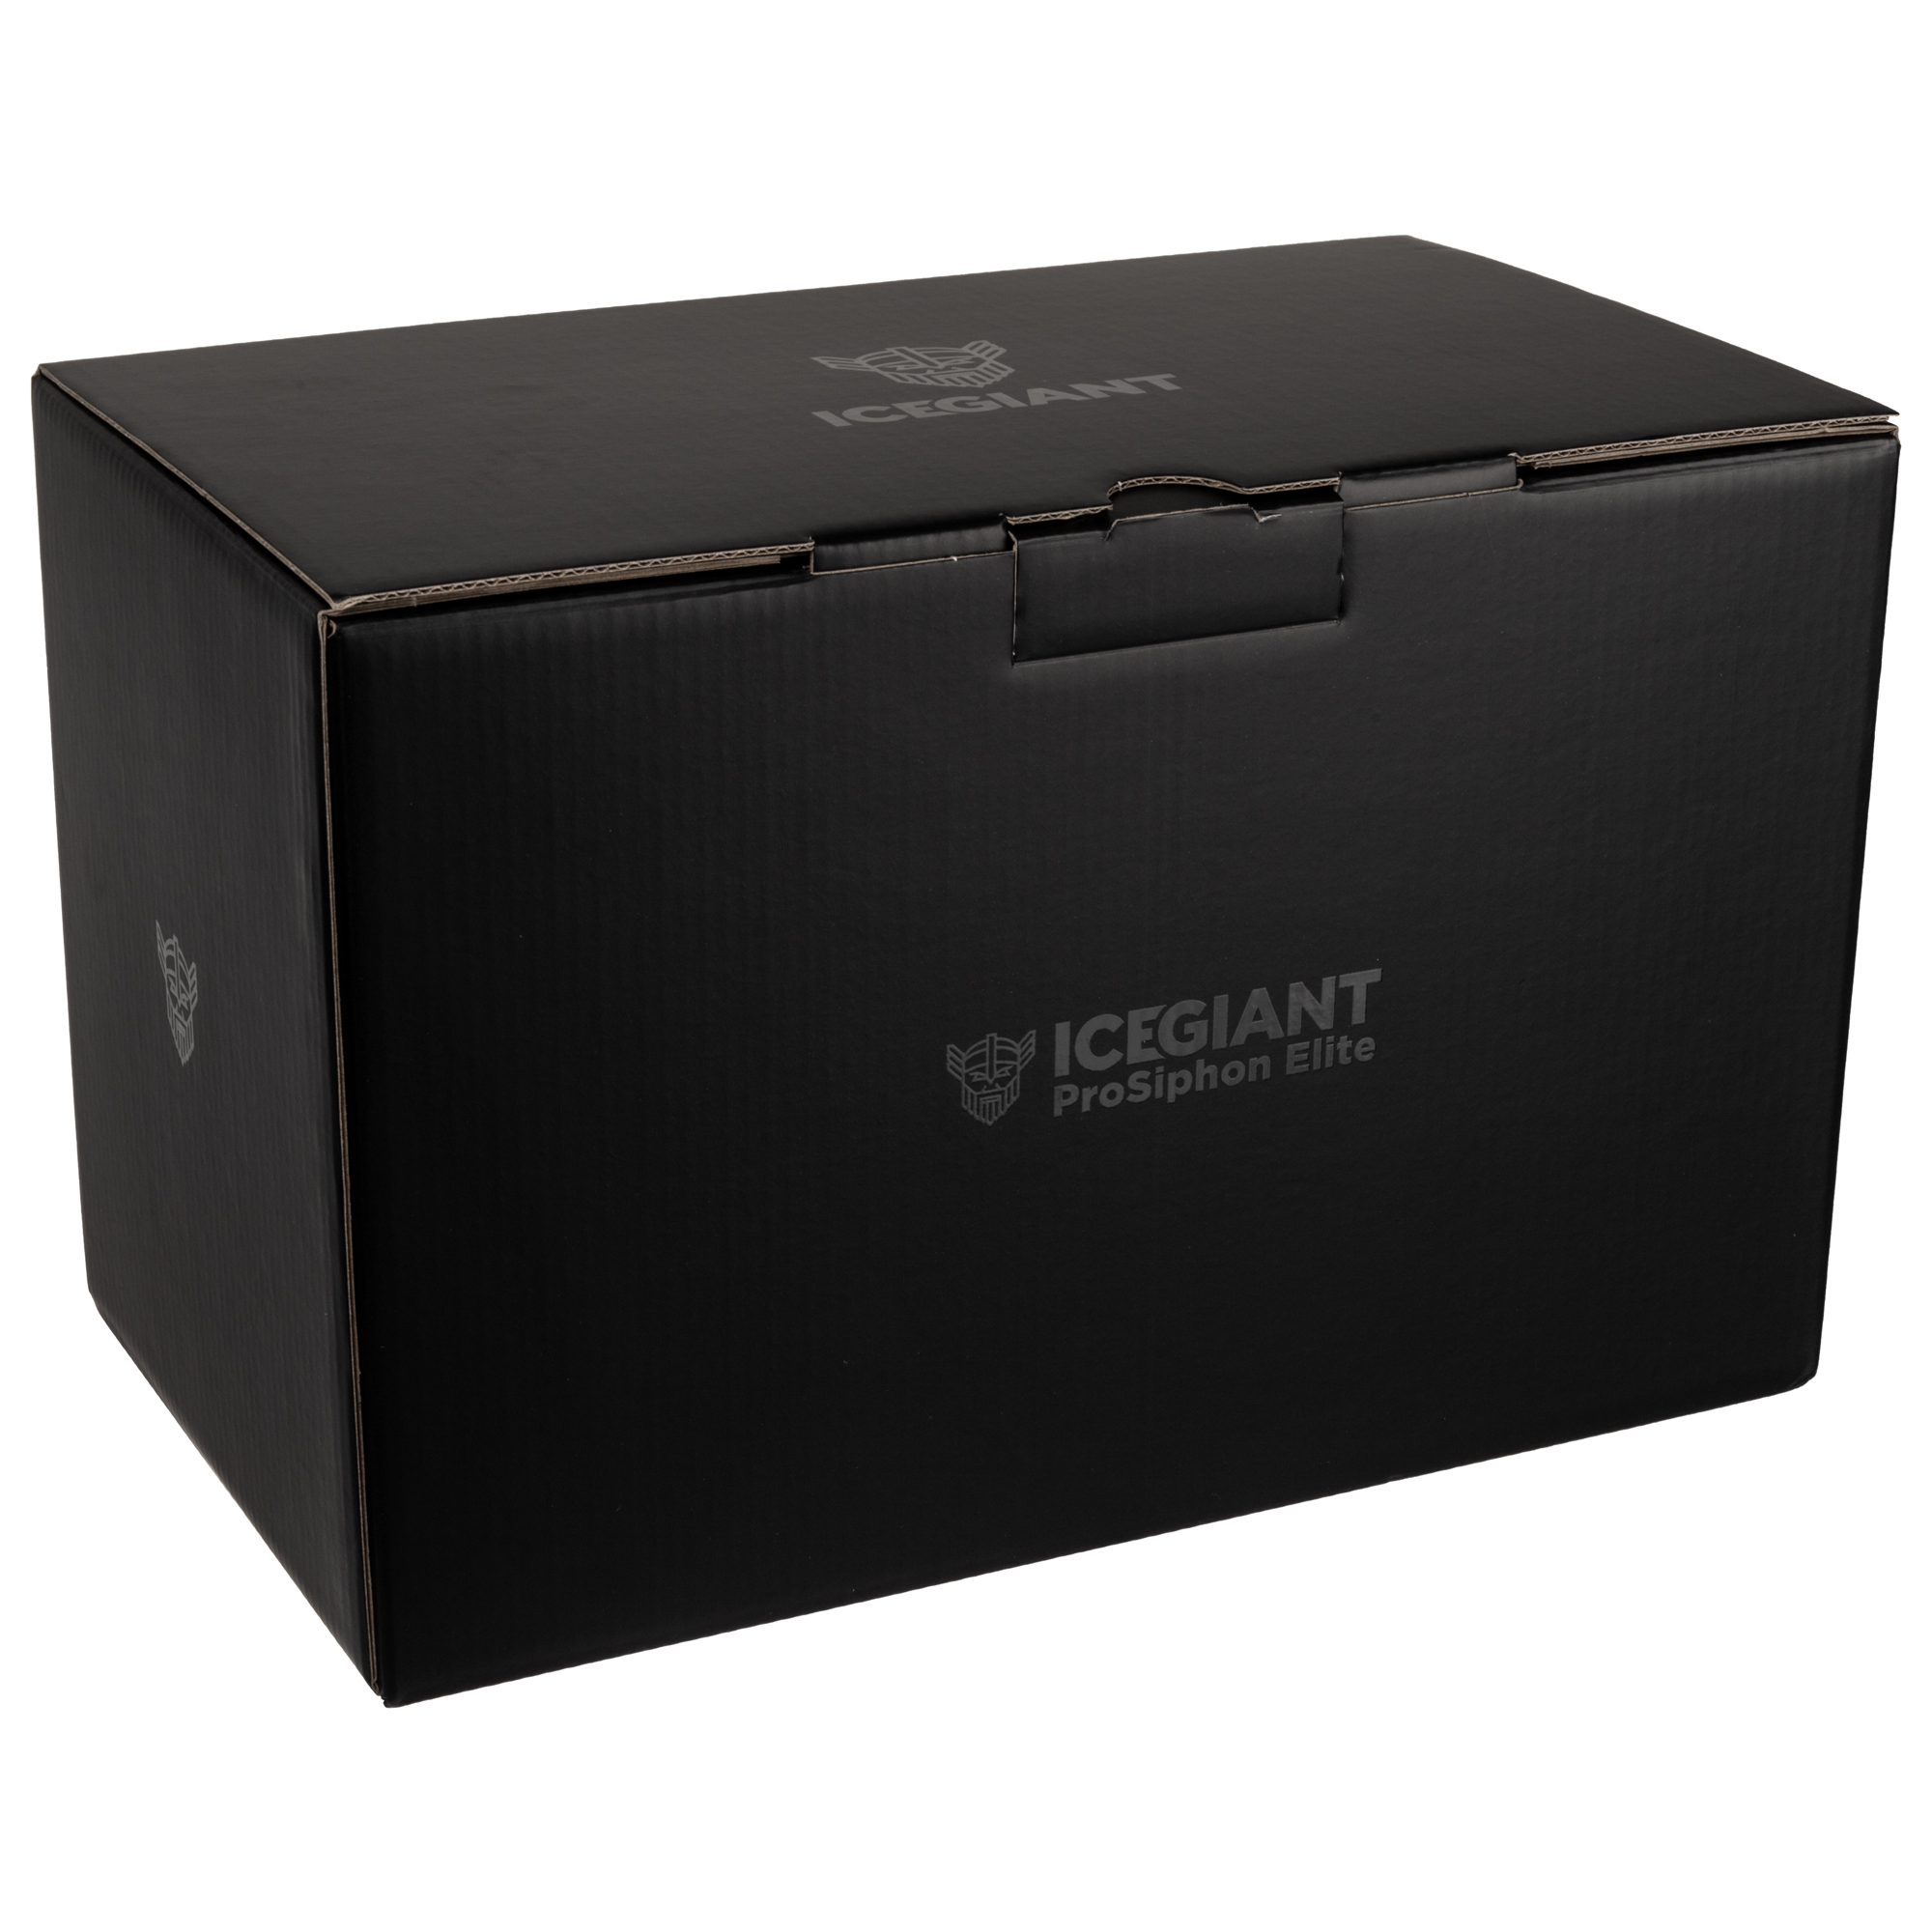 IceGiant ProSiphon Elite 4x12cm